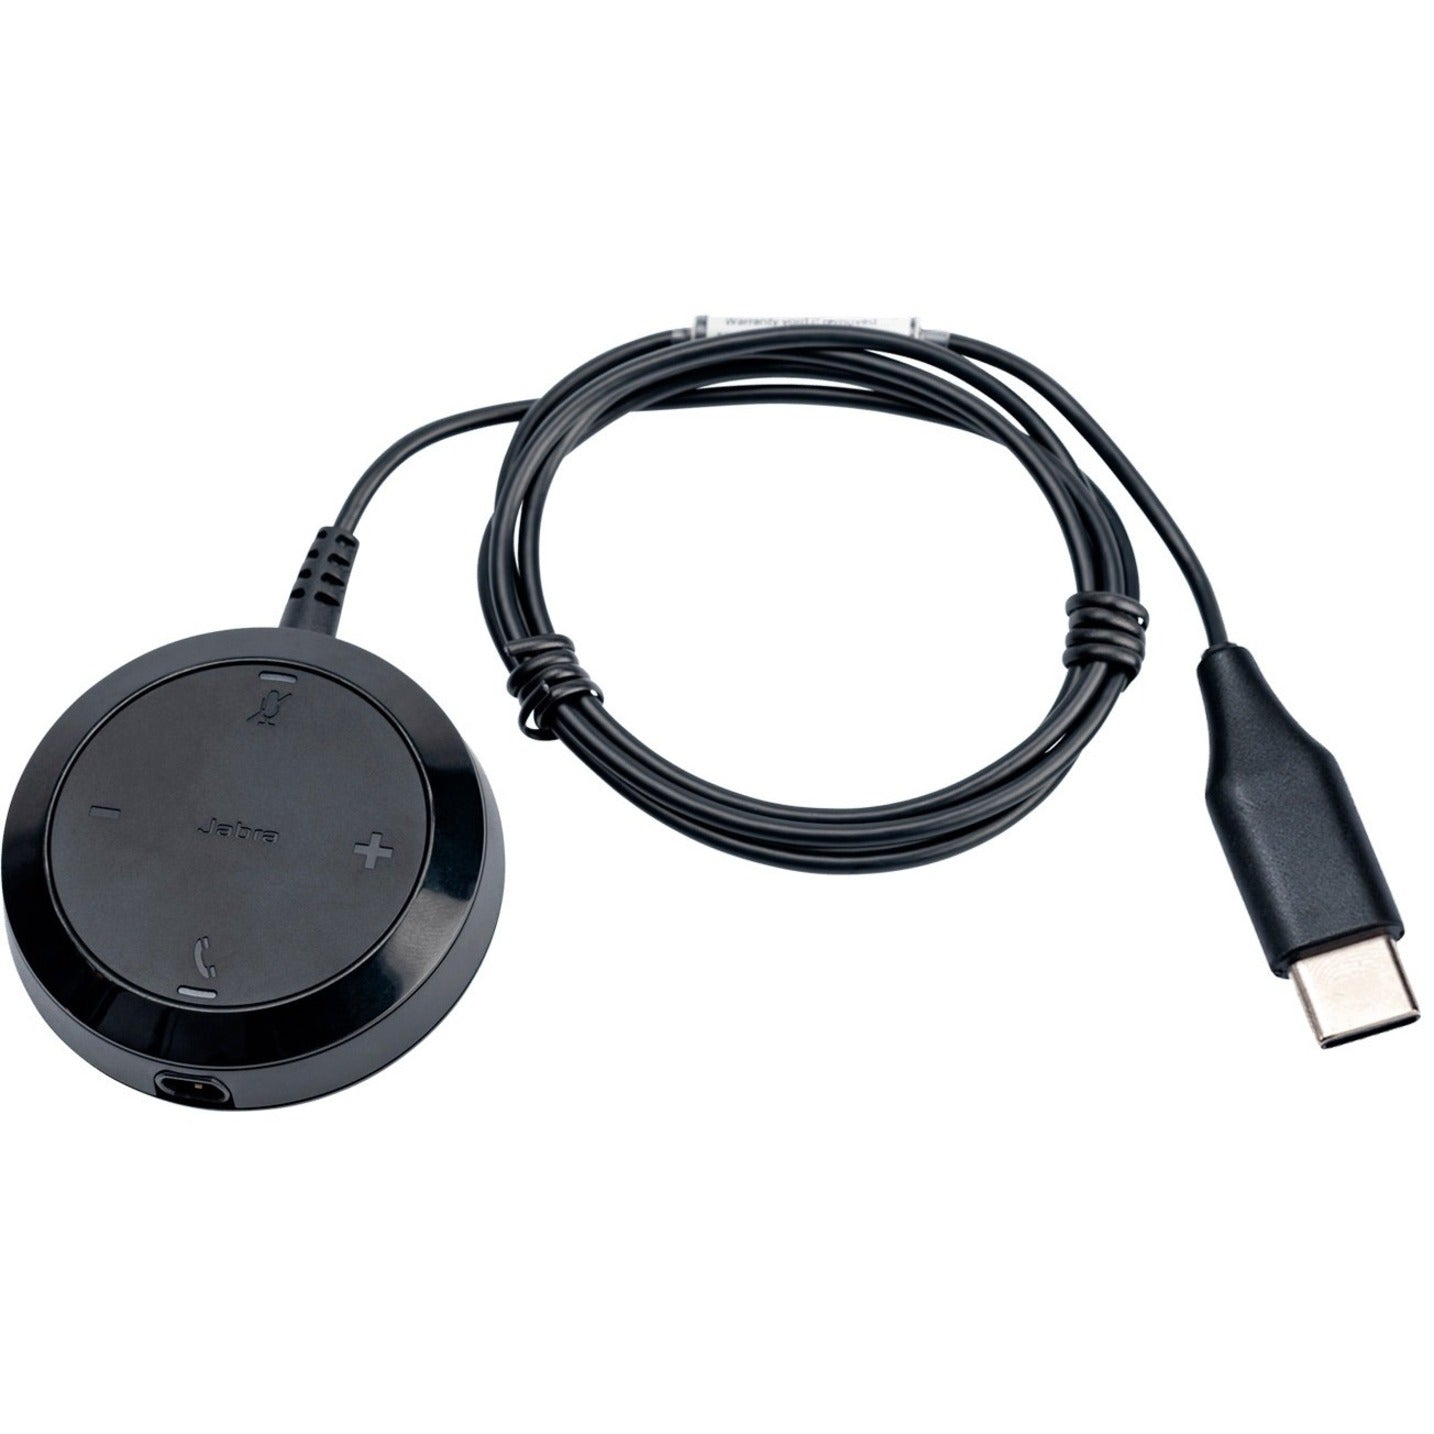 Jabra 5393-823-389 EVOLVE 30 II Headset, USB Type C Wired Stereo Headset with LED Indicator